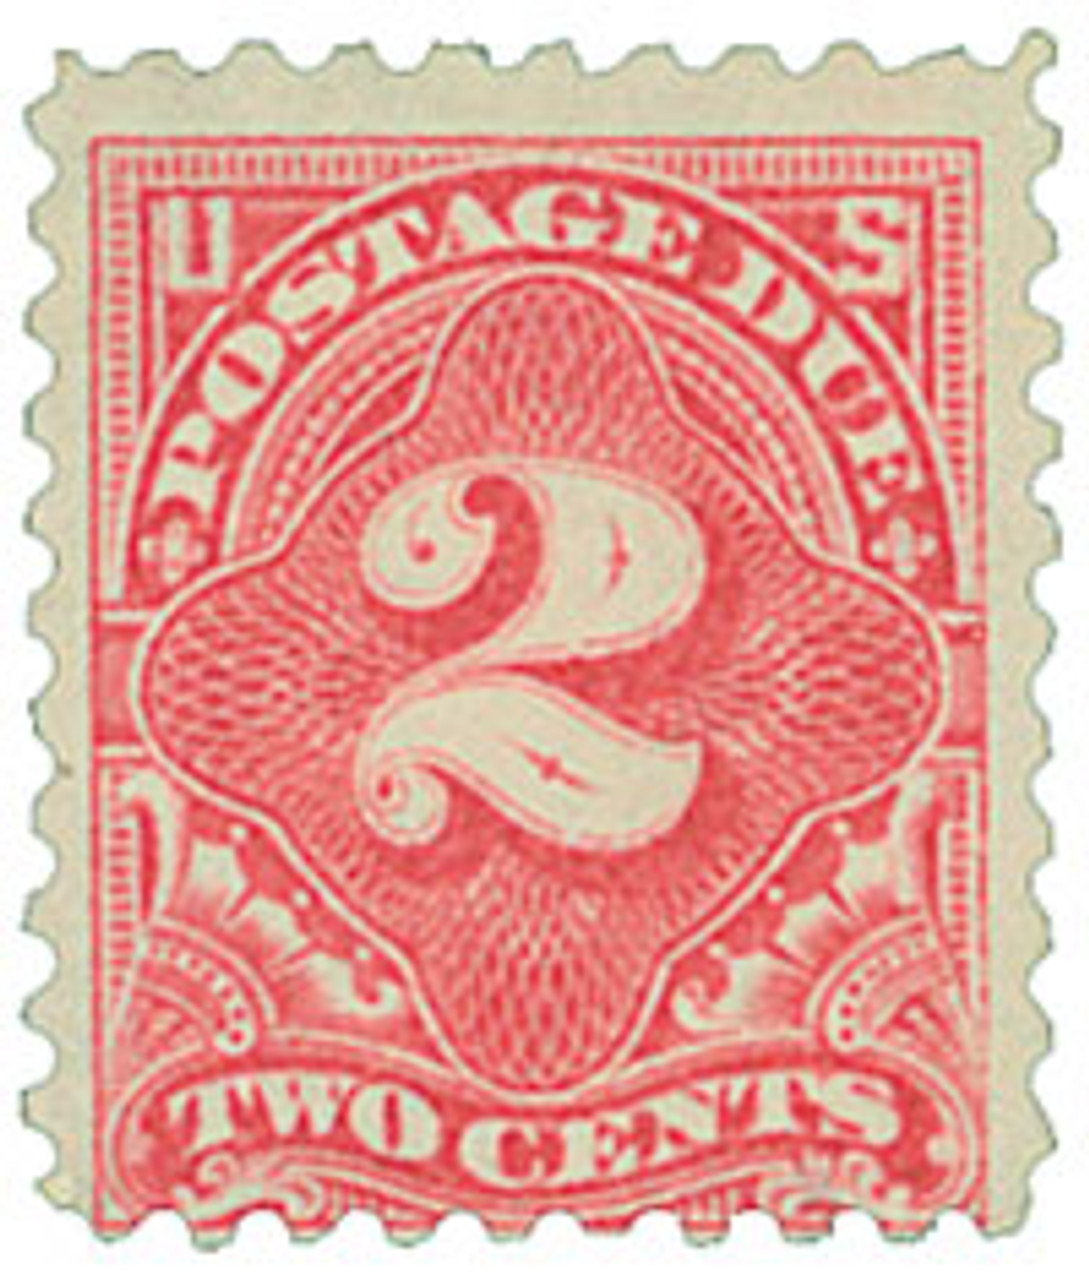 Postage stamp template …  Postage stamp art, Post stamp, Postage stamps